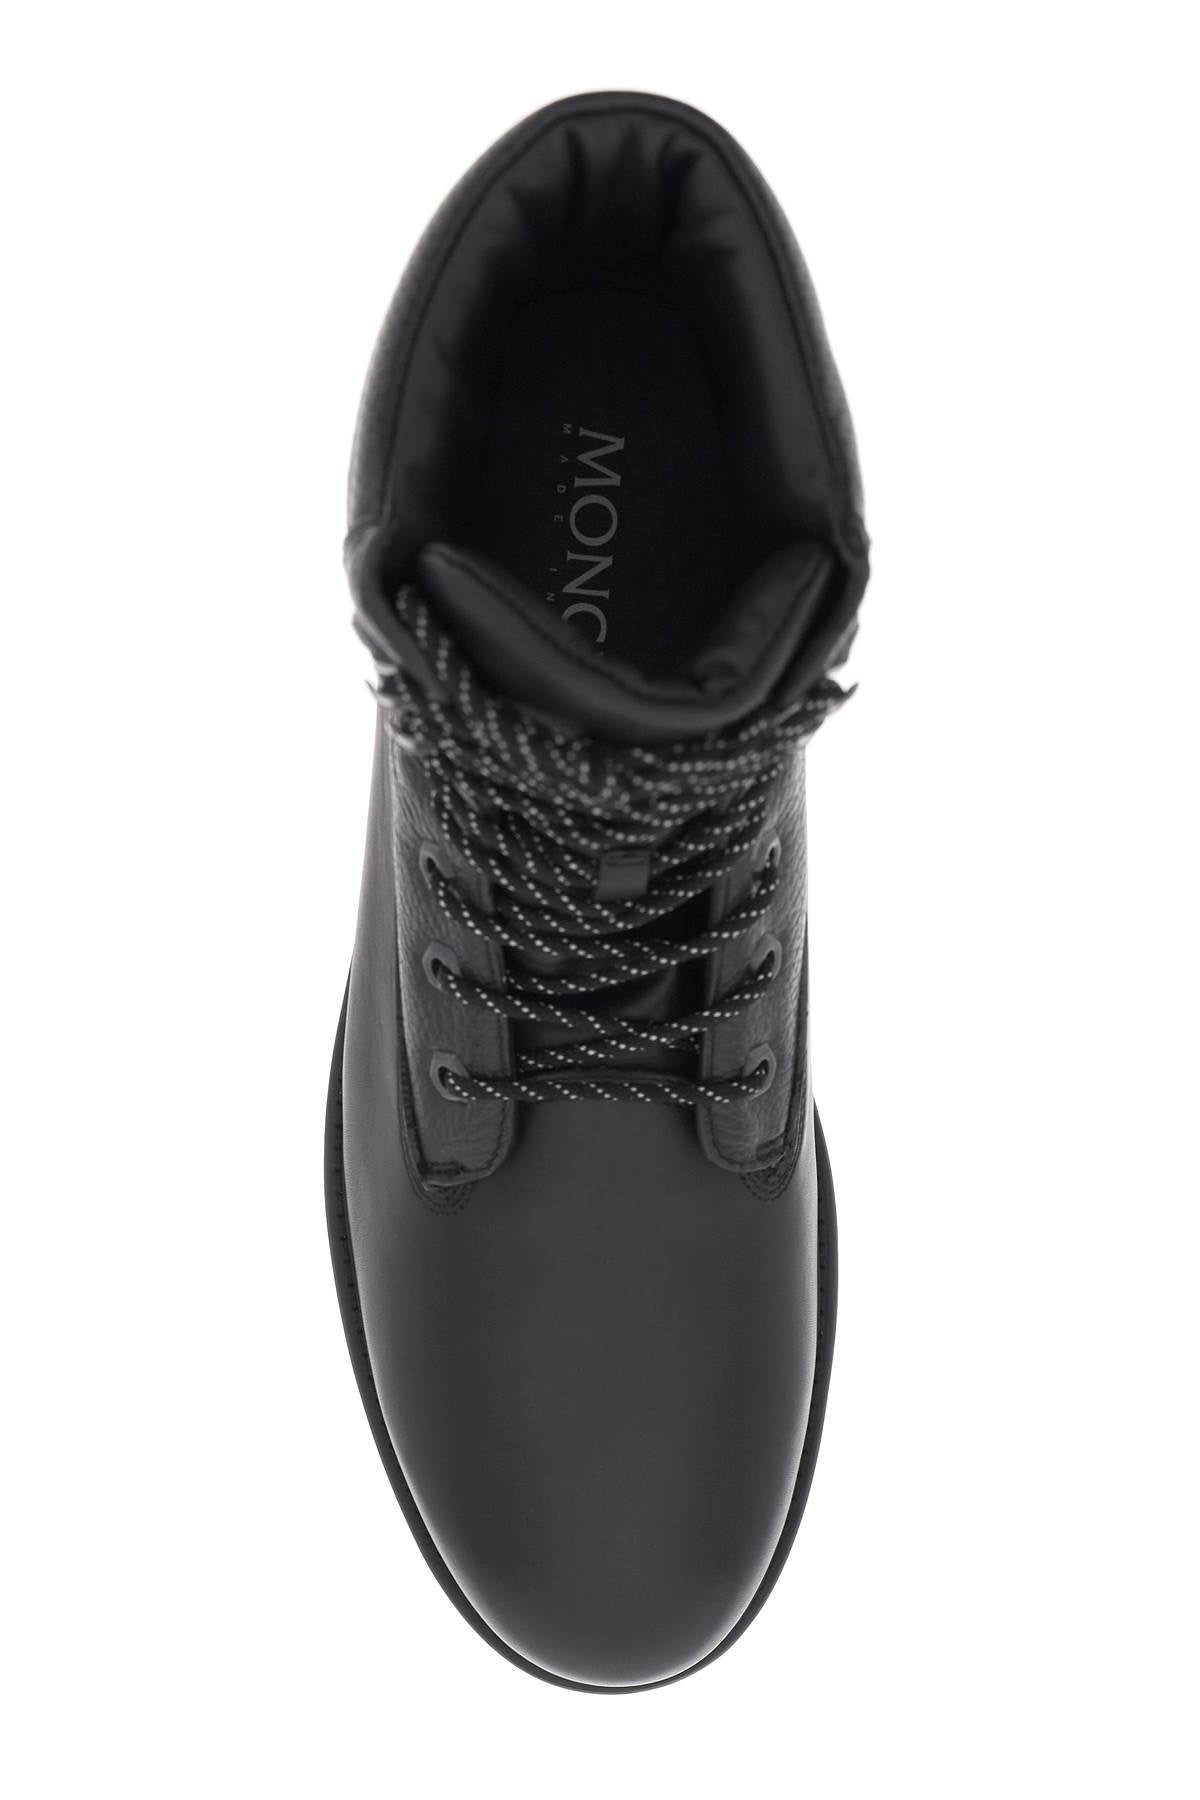 Moncler Moncler basic peka lace-up boots